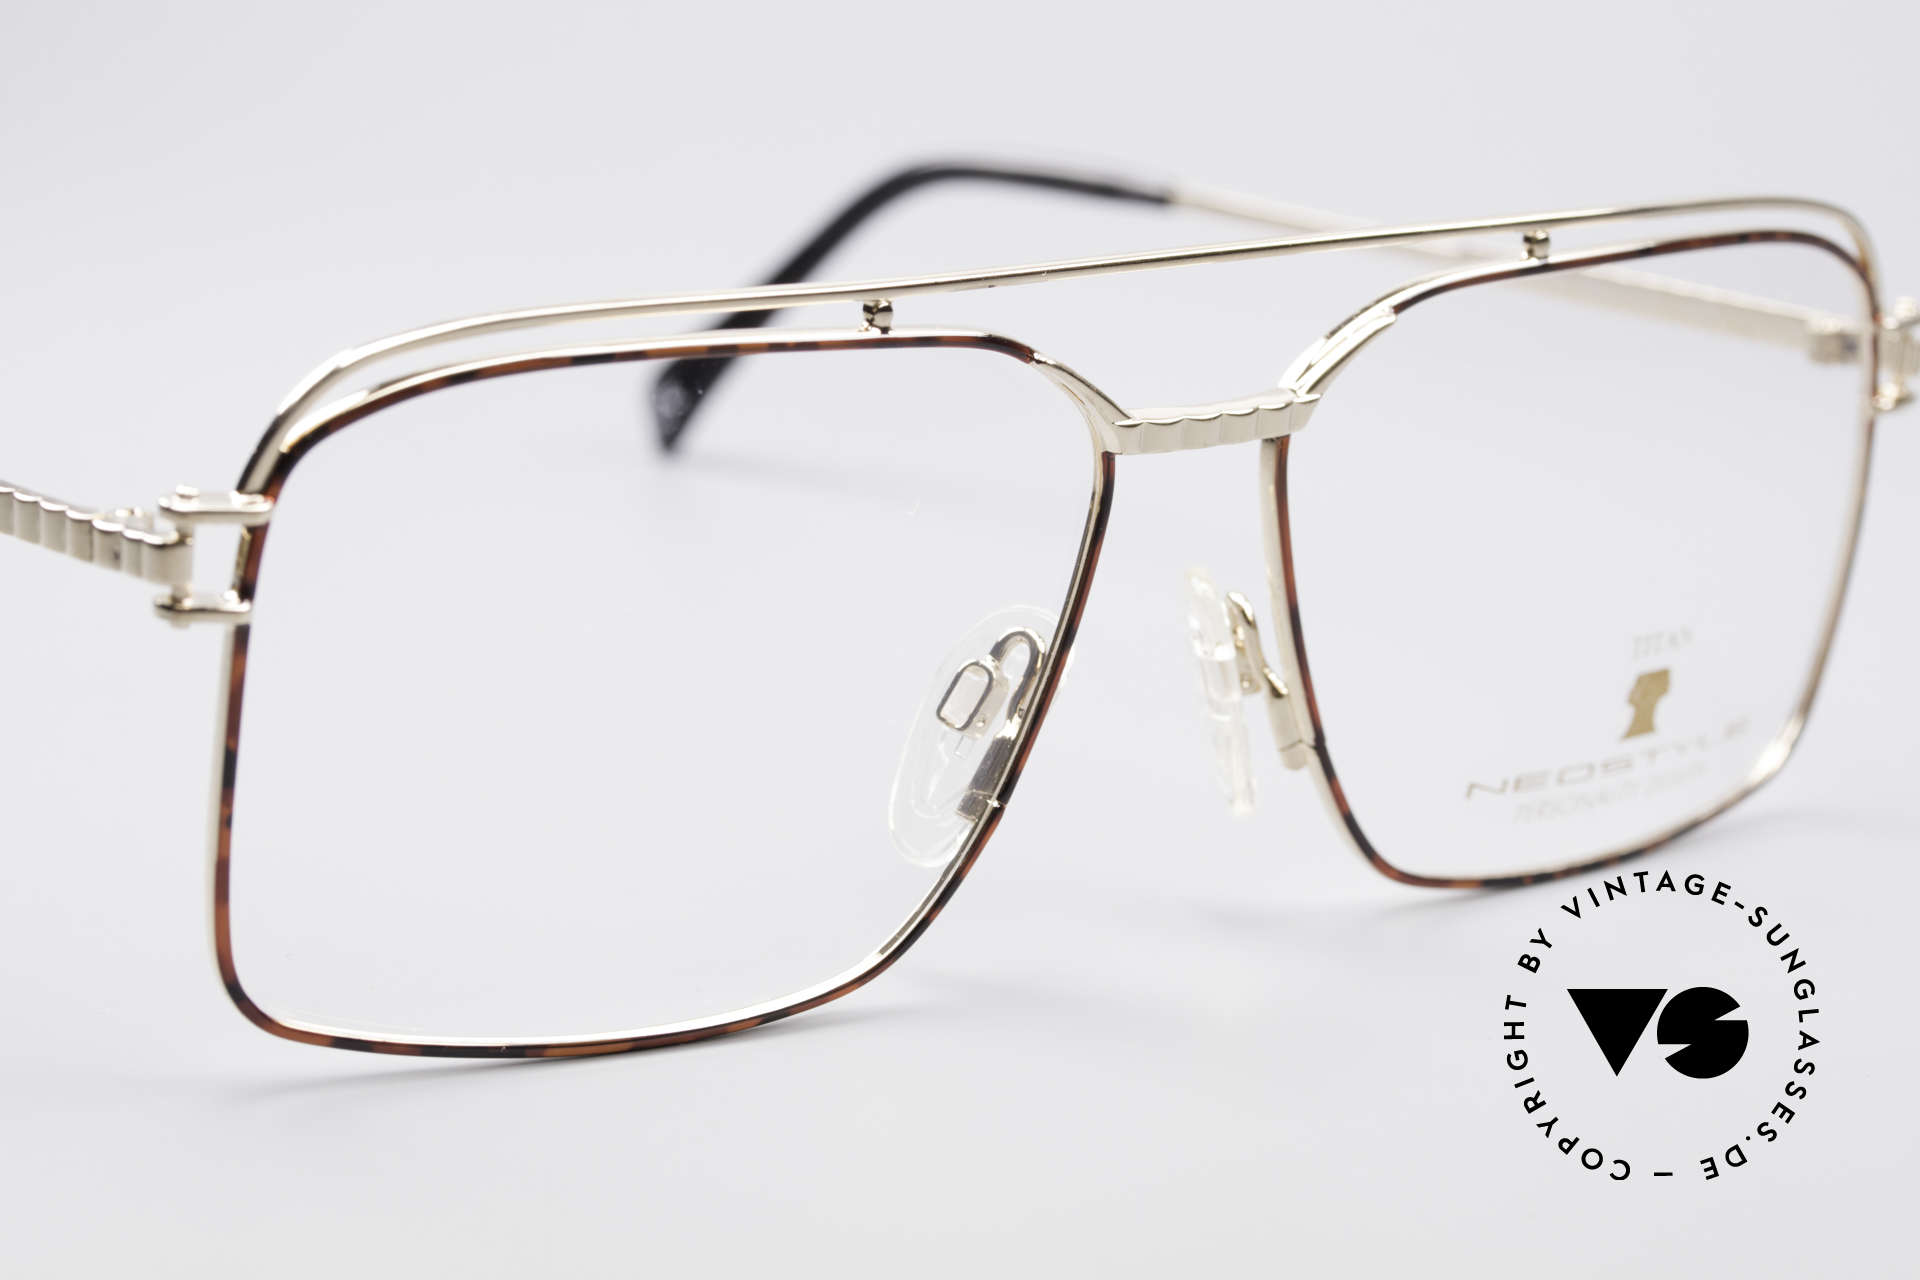 Neostyle Dynasty 424 - XL 80's Titanium Men's Frame, never worn (like all our rare vintage eyeglasses), Made for Men